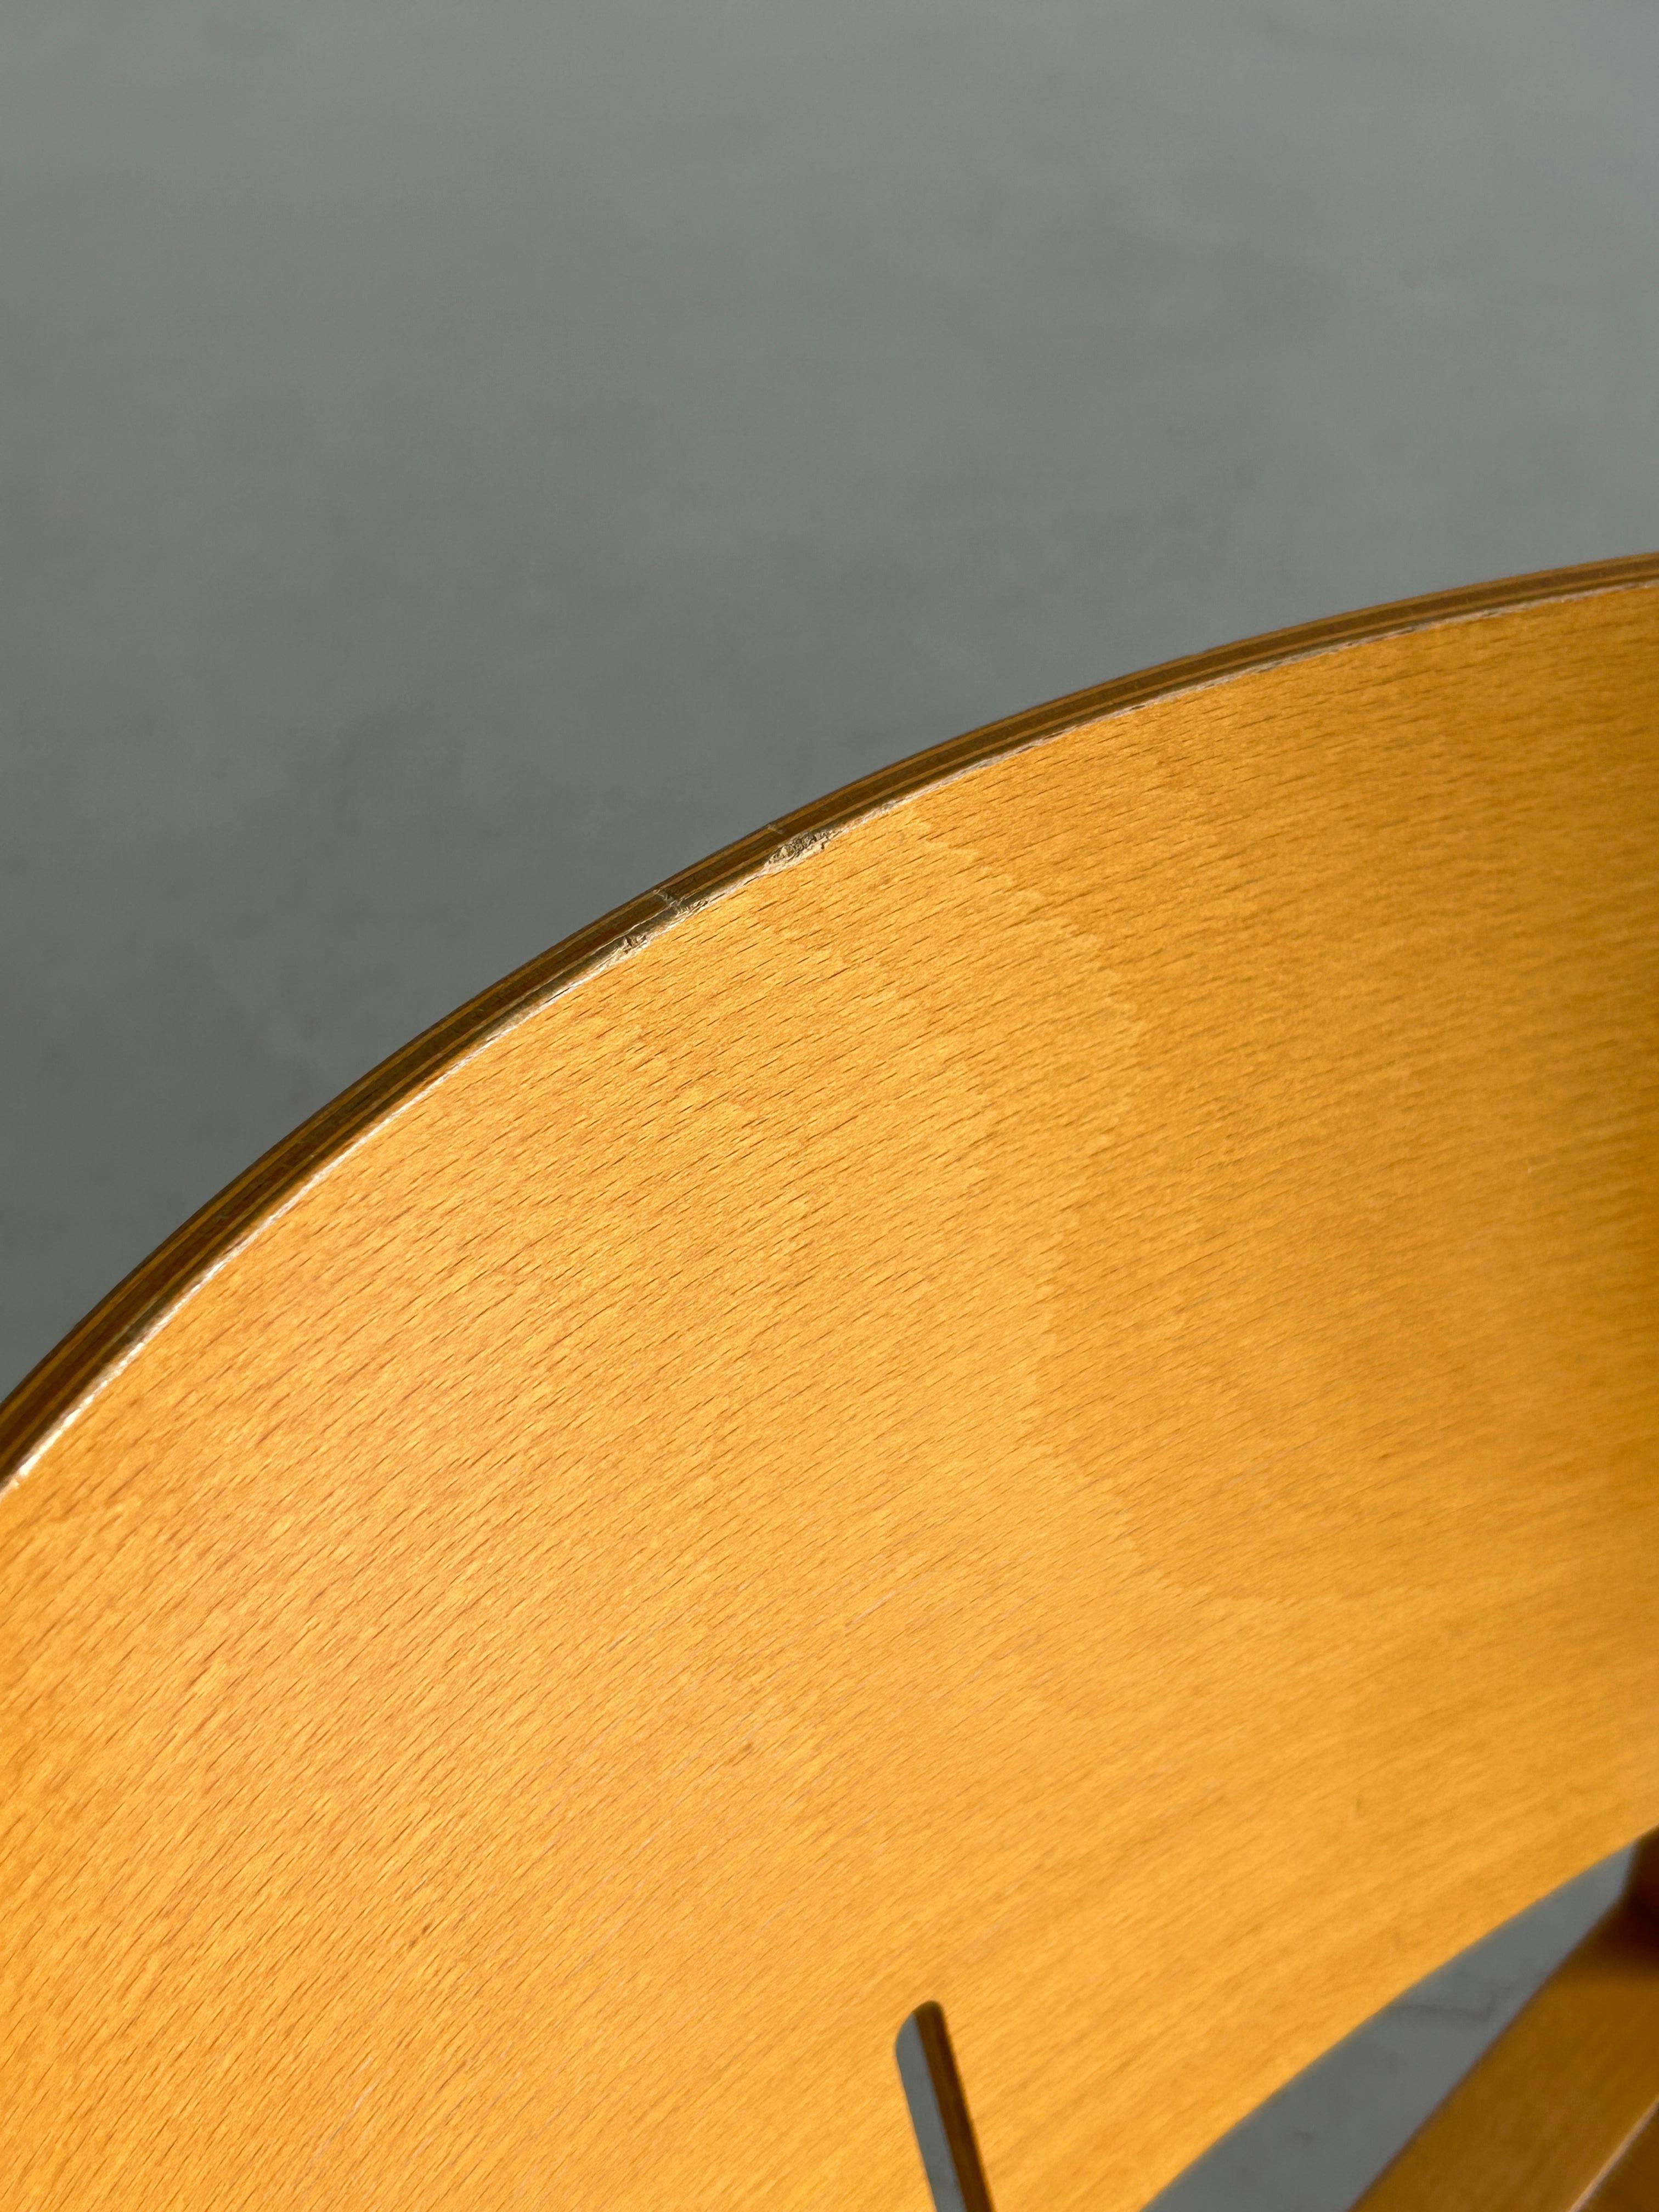 Thonet Postmodern Sculptural Wooden Chair, 1990s Austria For Sale 12